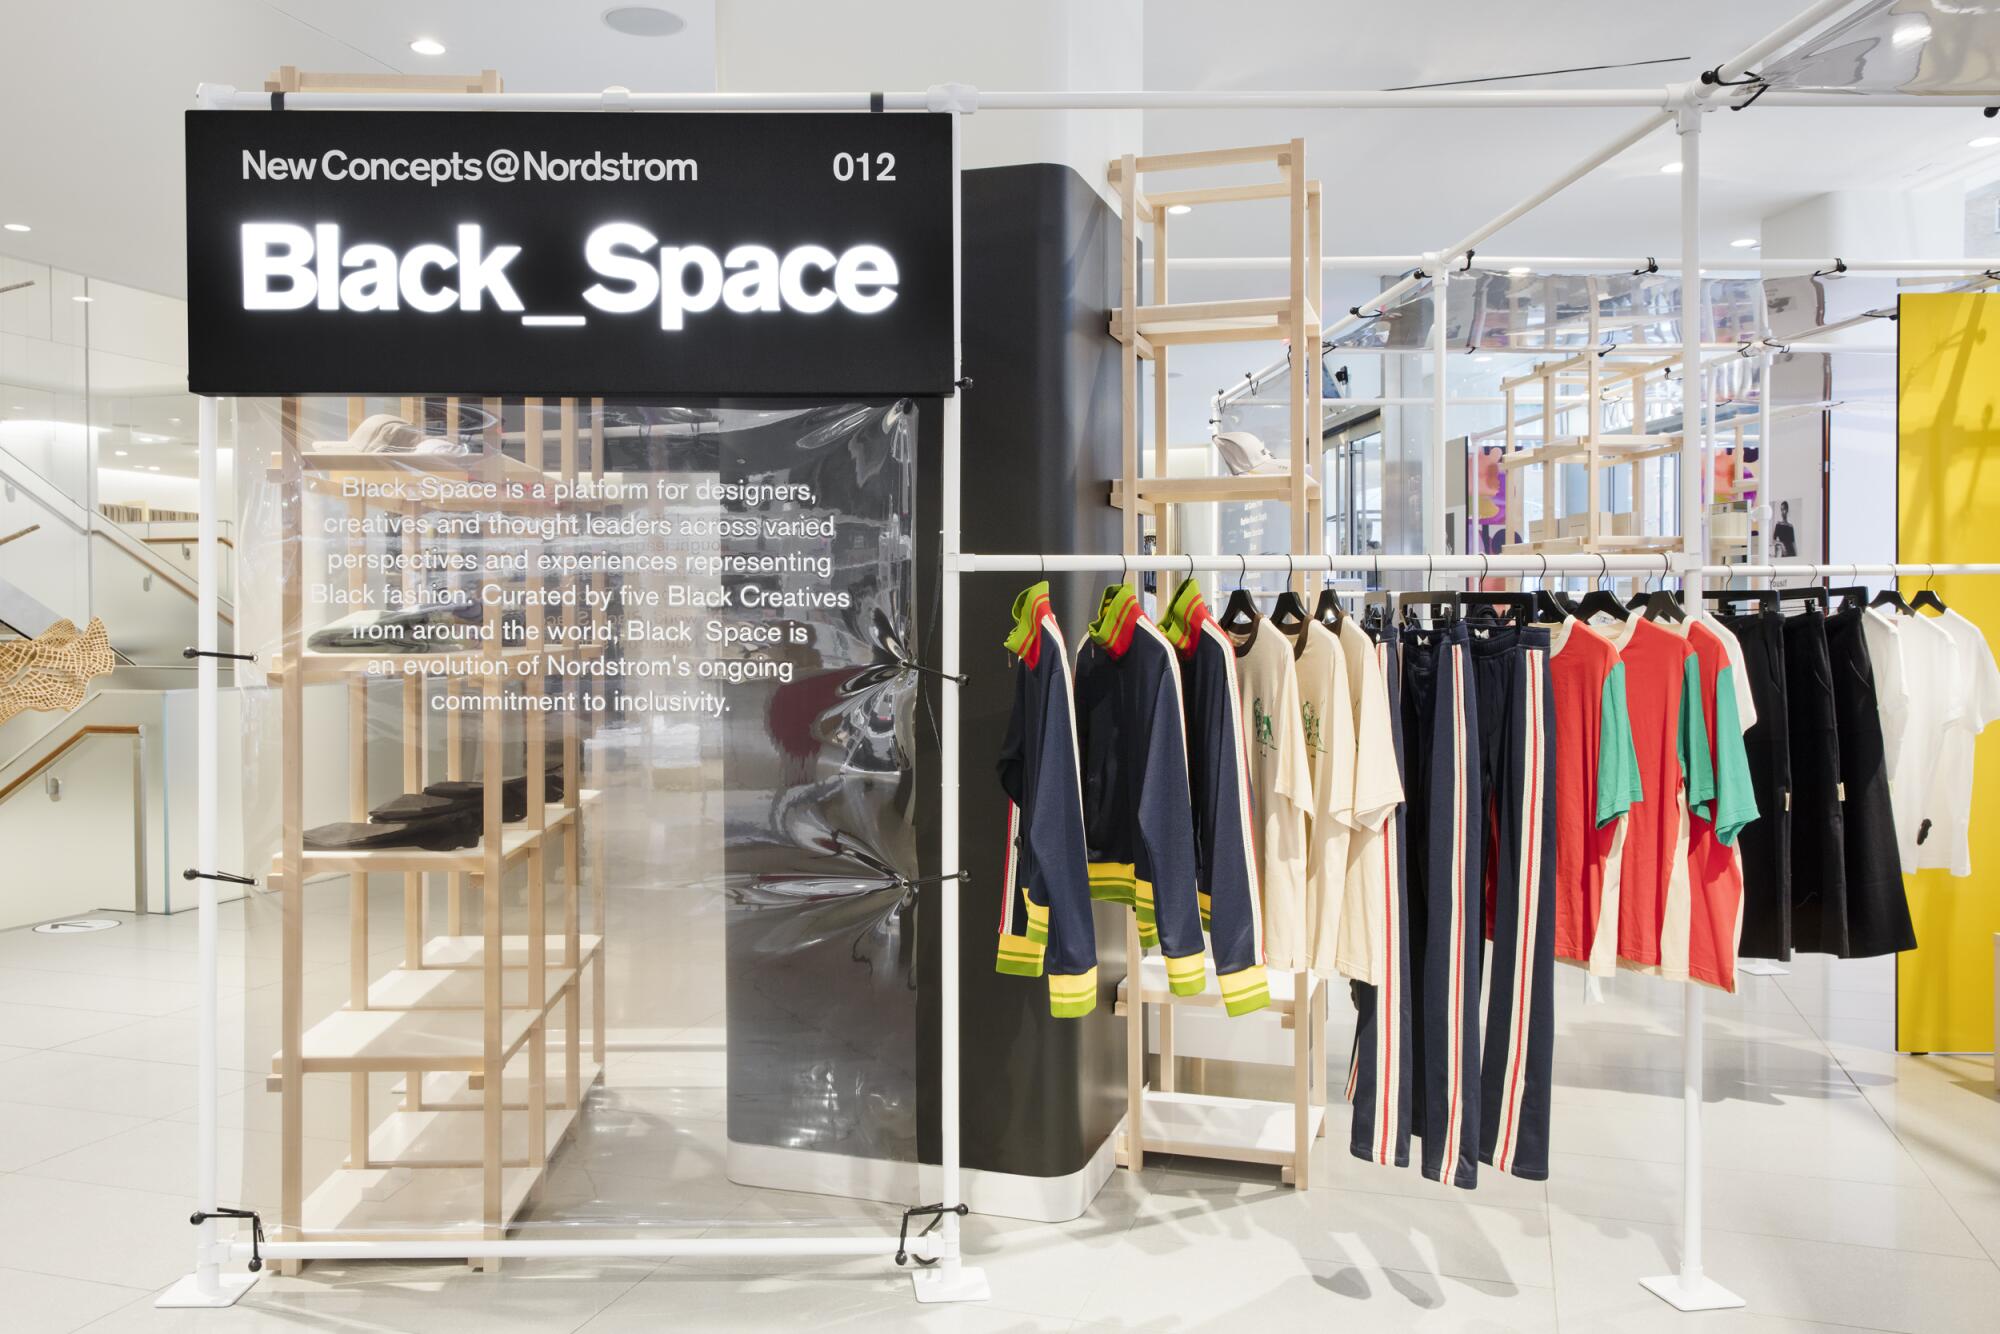 New Concepts @ Nordstrom pop-up, Concept 012 Black_Space